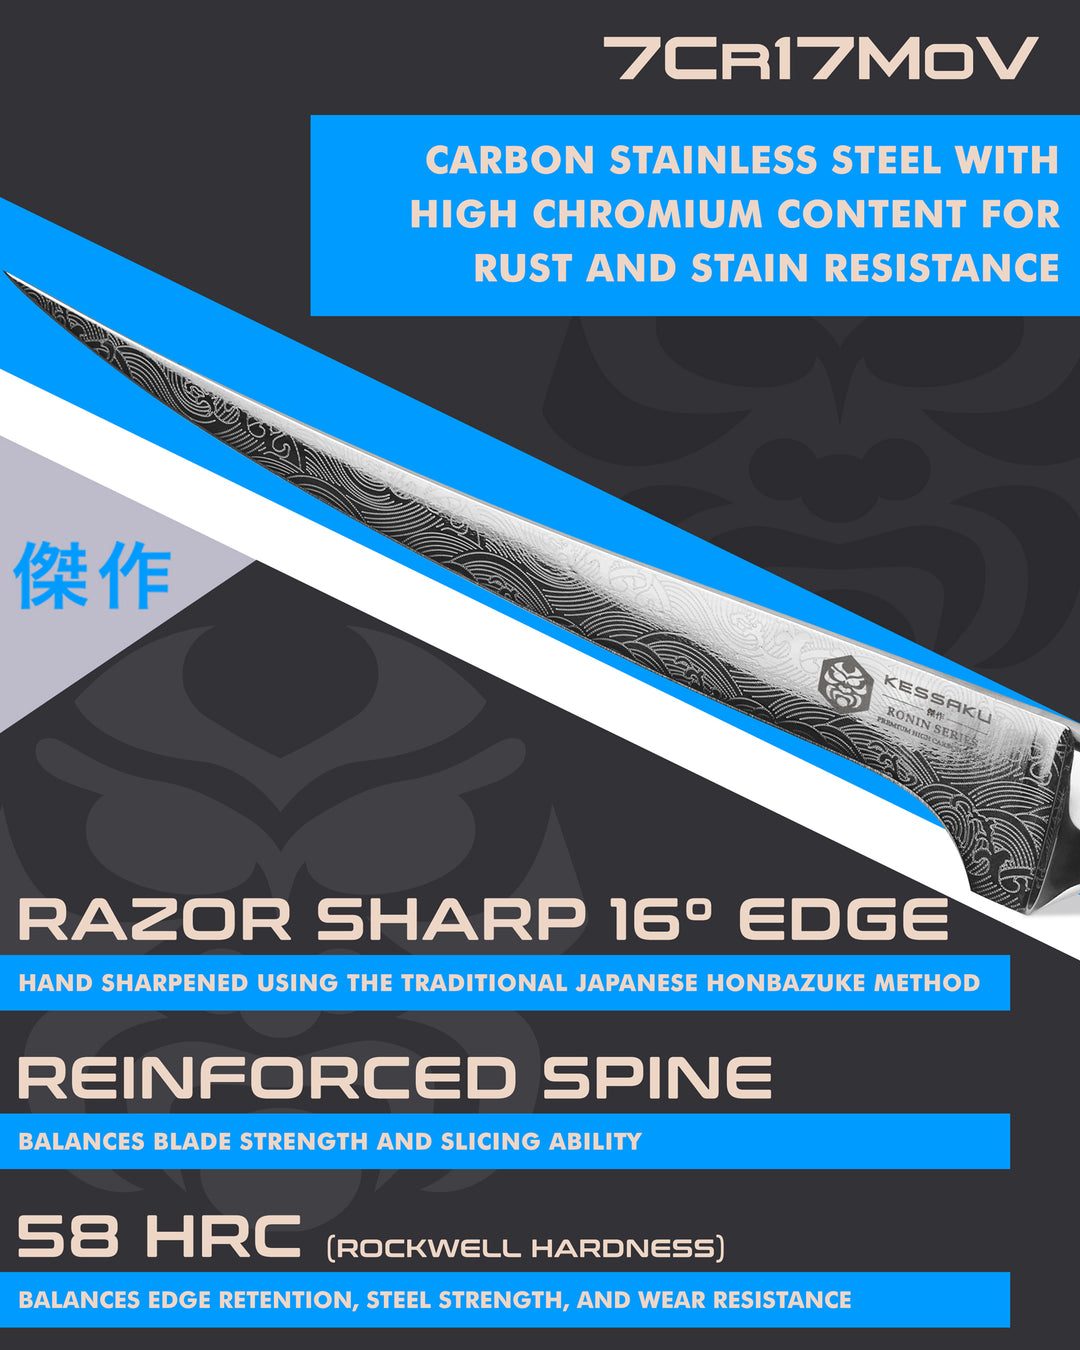 Kessaku Ronin Fillet Knife blade features: 7Cr17MoV steel, 58 HRC, 16 degree edge, reinforced spine